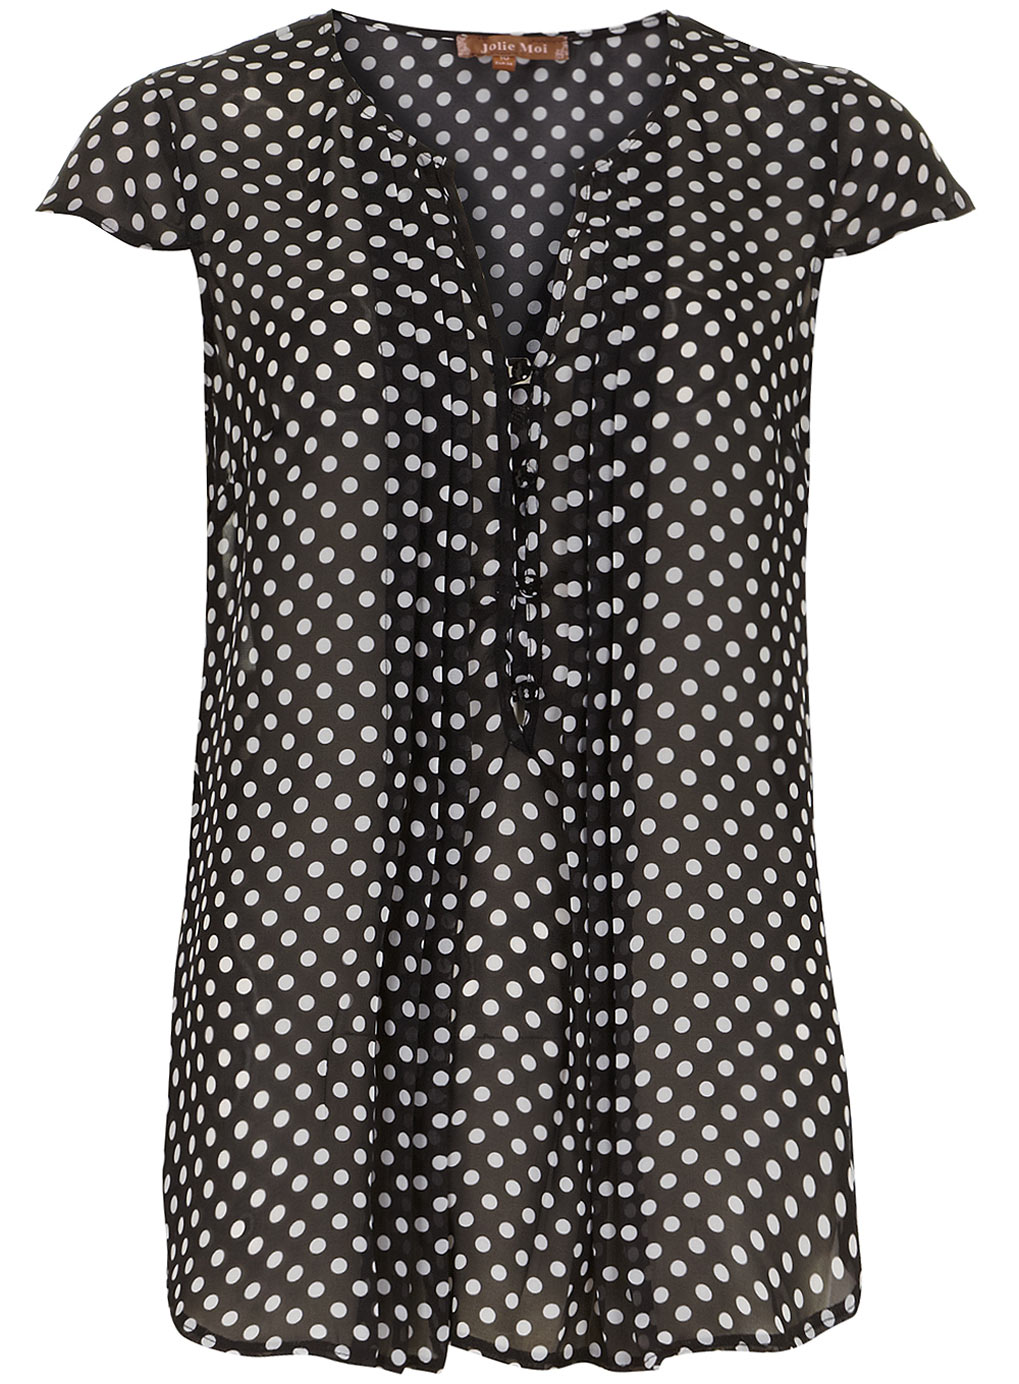 Dorothy Perkins Jolie Moi Black dot button front blouse 61410150